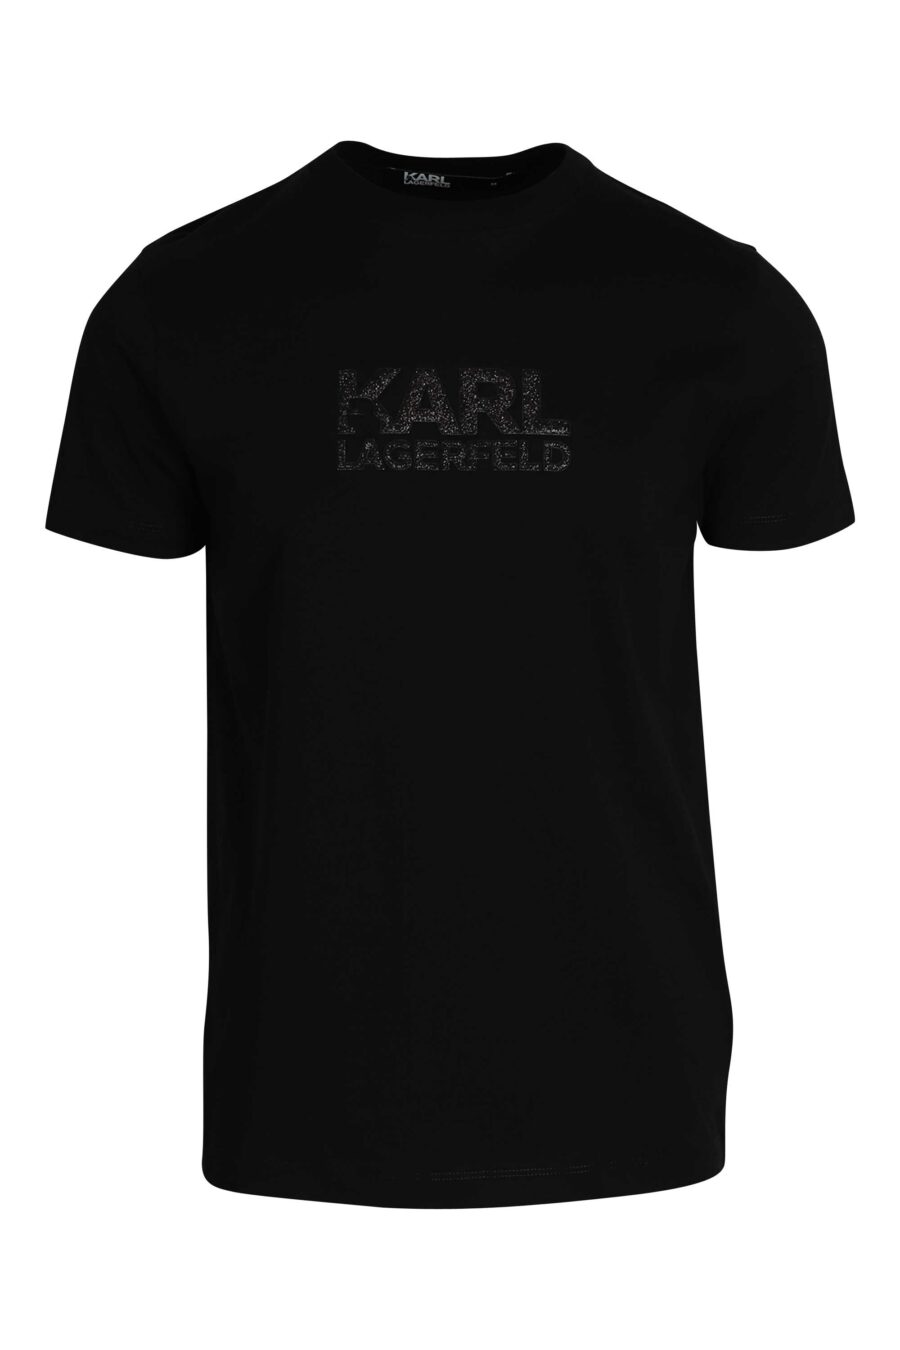 Camiseta negra con maxilogo negro brillante - 014543001